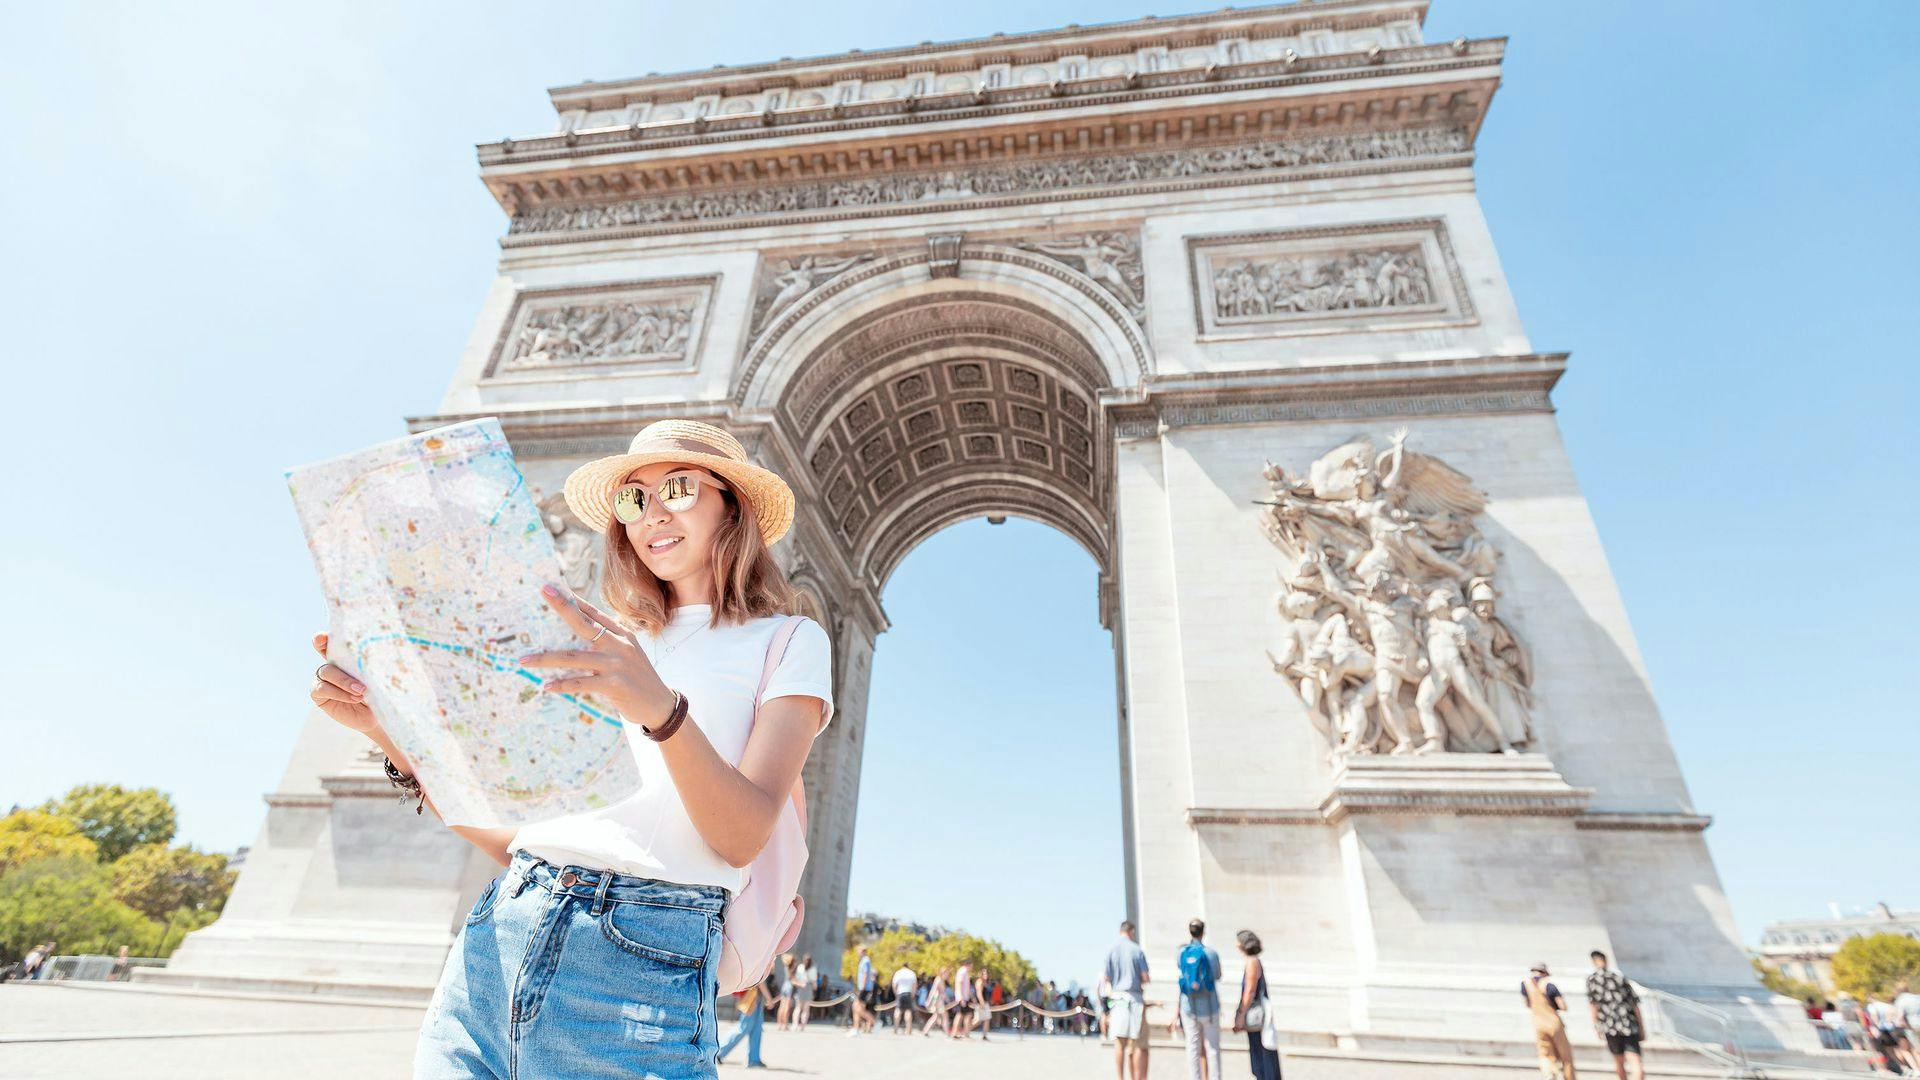 Arc de Triomphe skip the line tickets with audio tour on mobile app